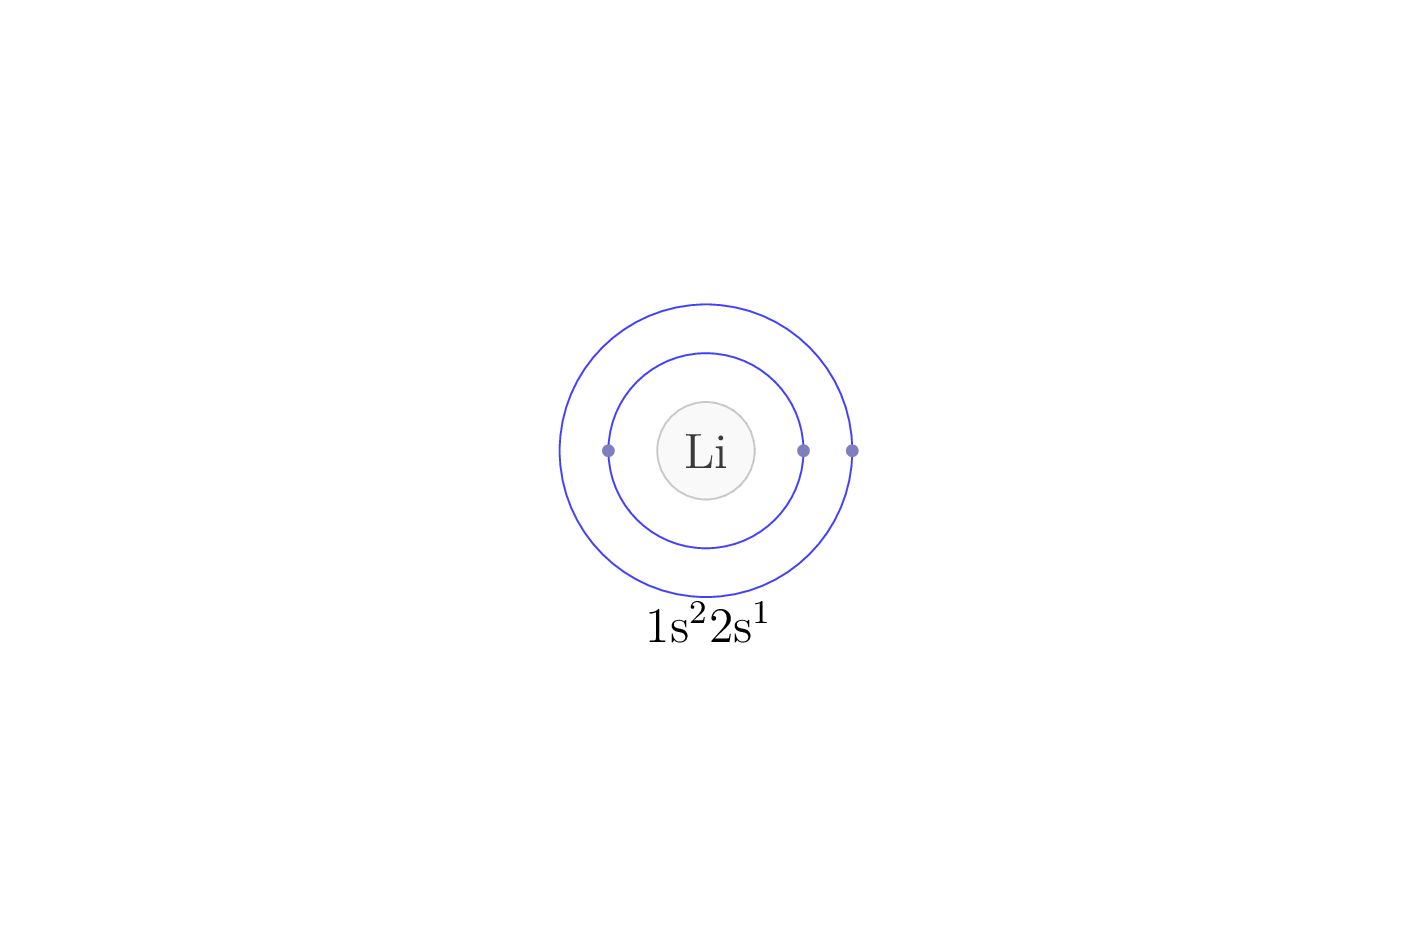 electron configuration of element Li